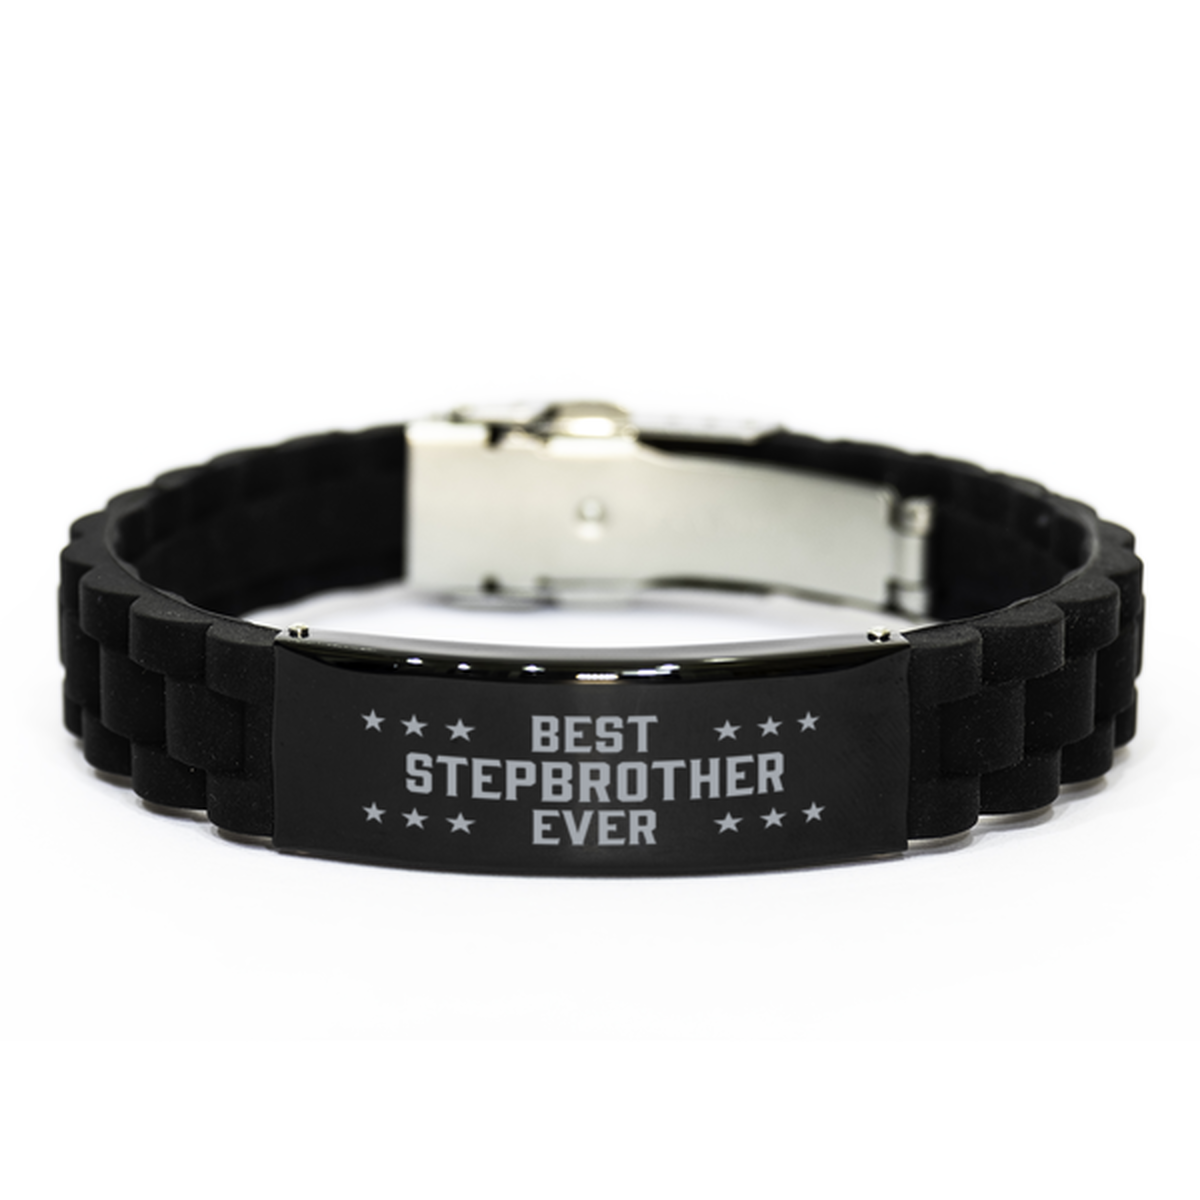 Best Stepbrother Ever Stepbrother Gifts, Funny Black Engraved Bracelet For Stepbrother, Family Gifts For Men